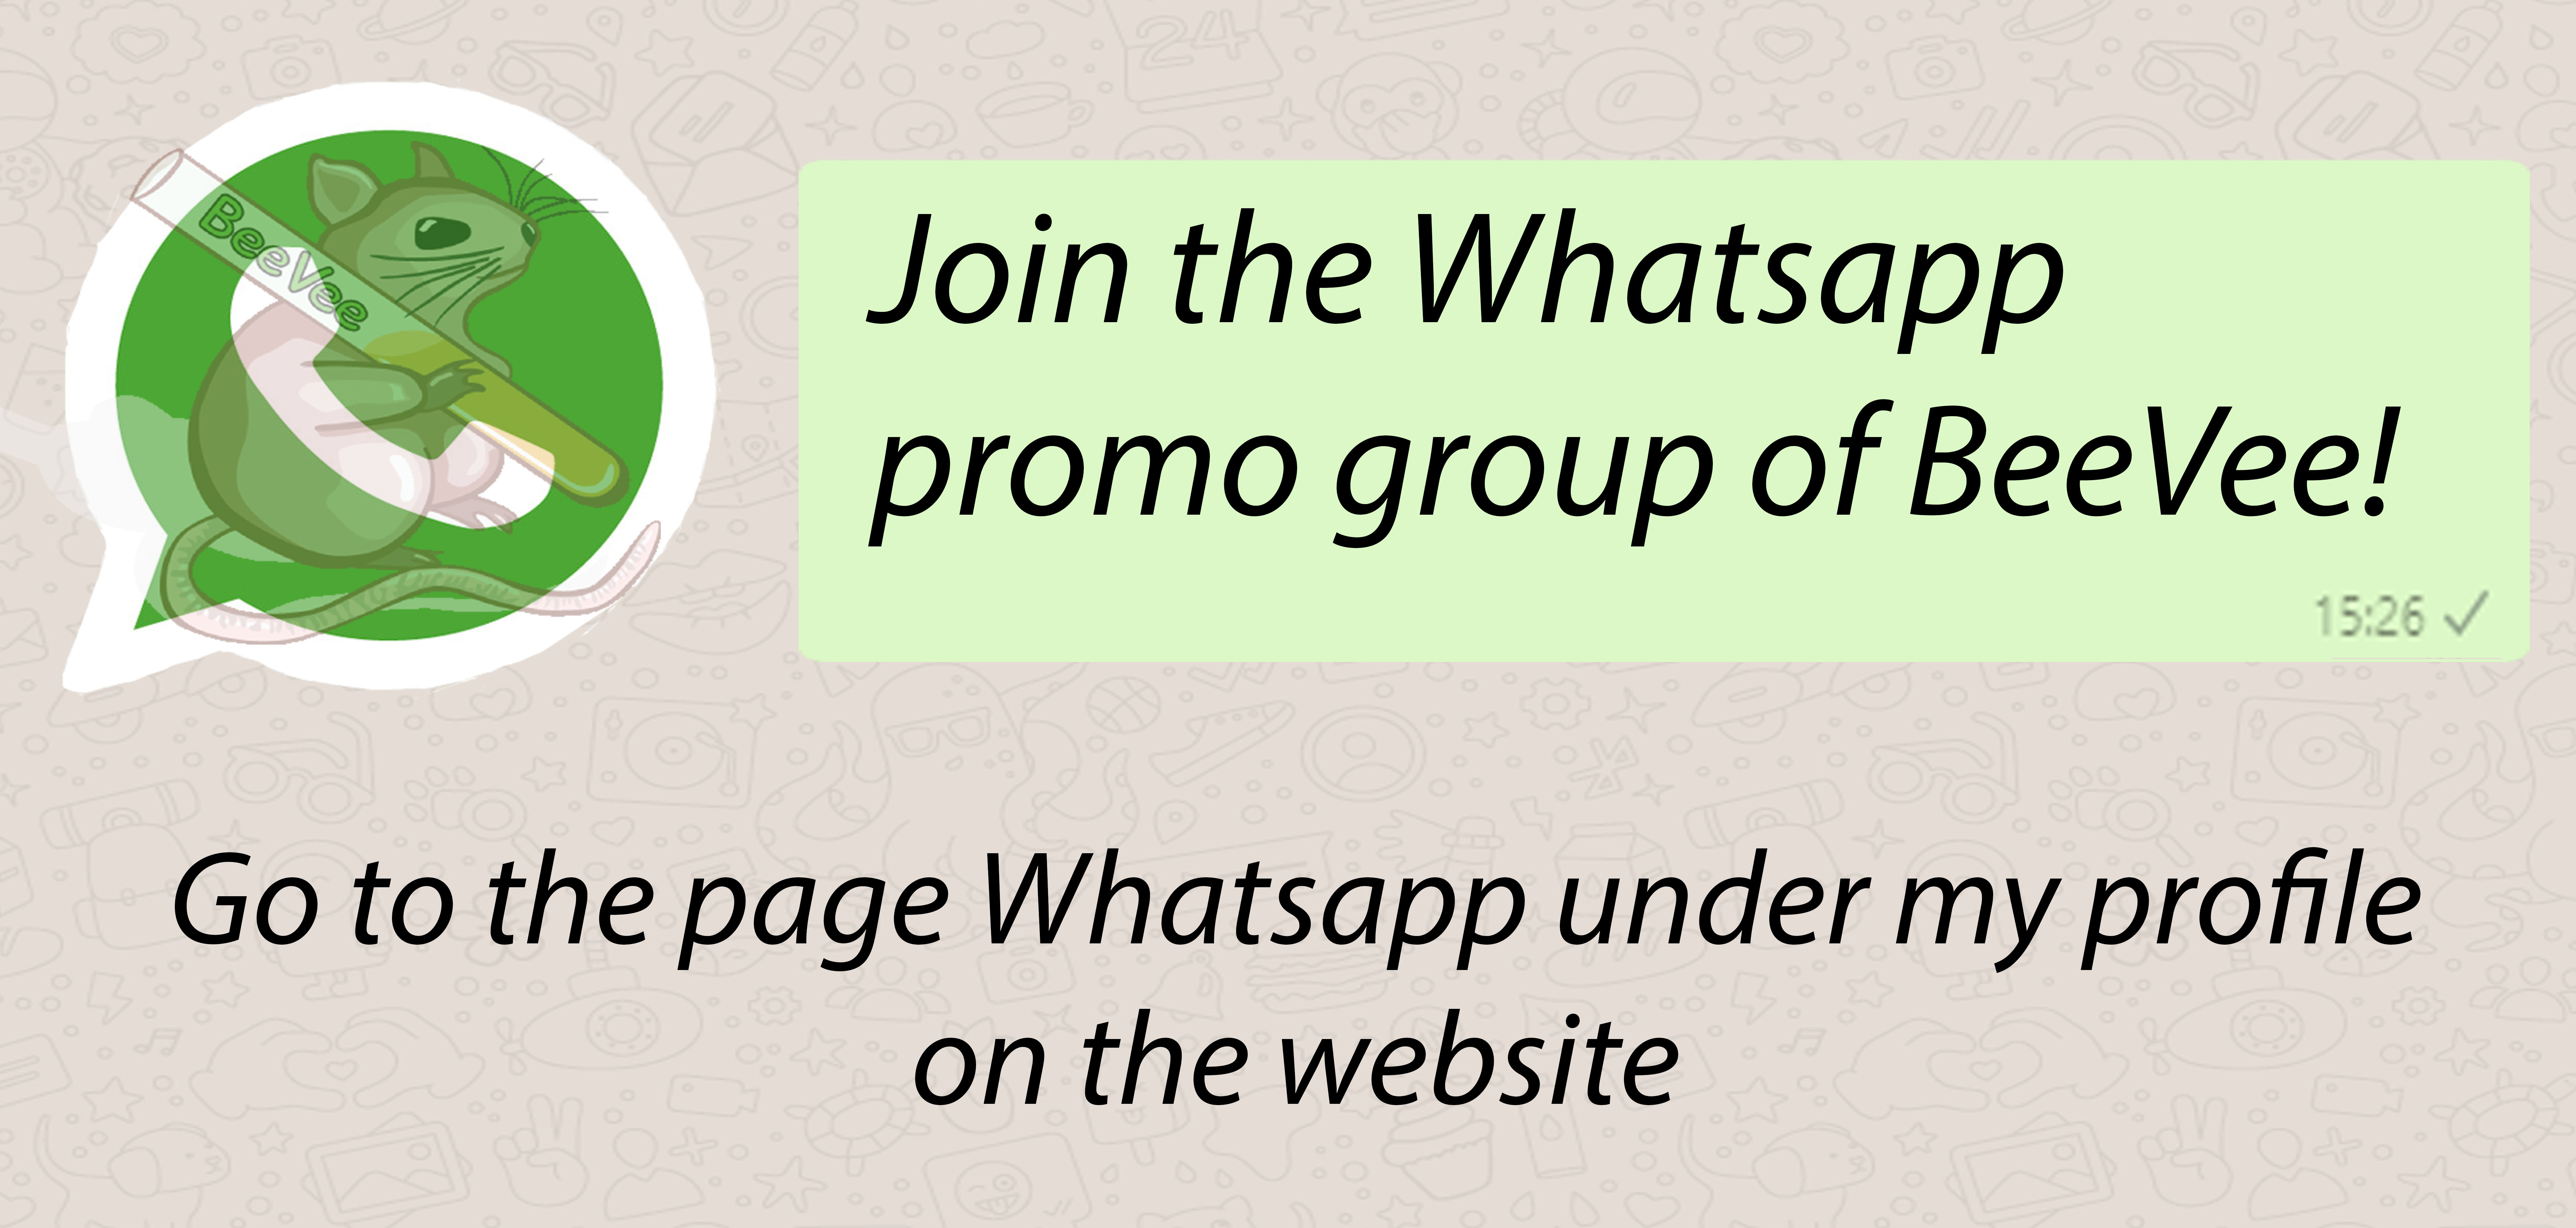 WhatsApp promo group